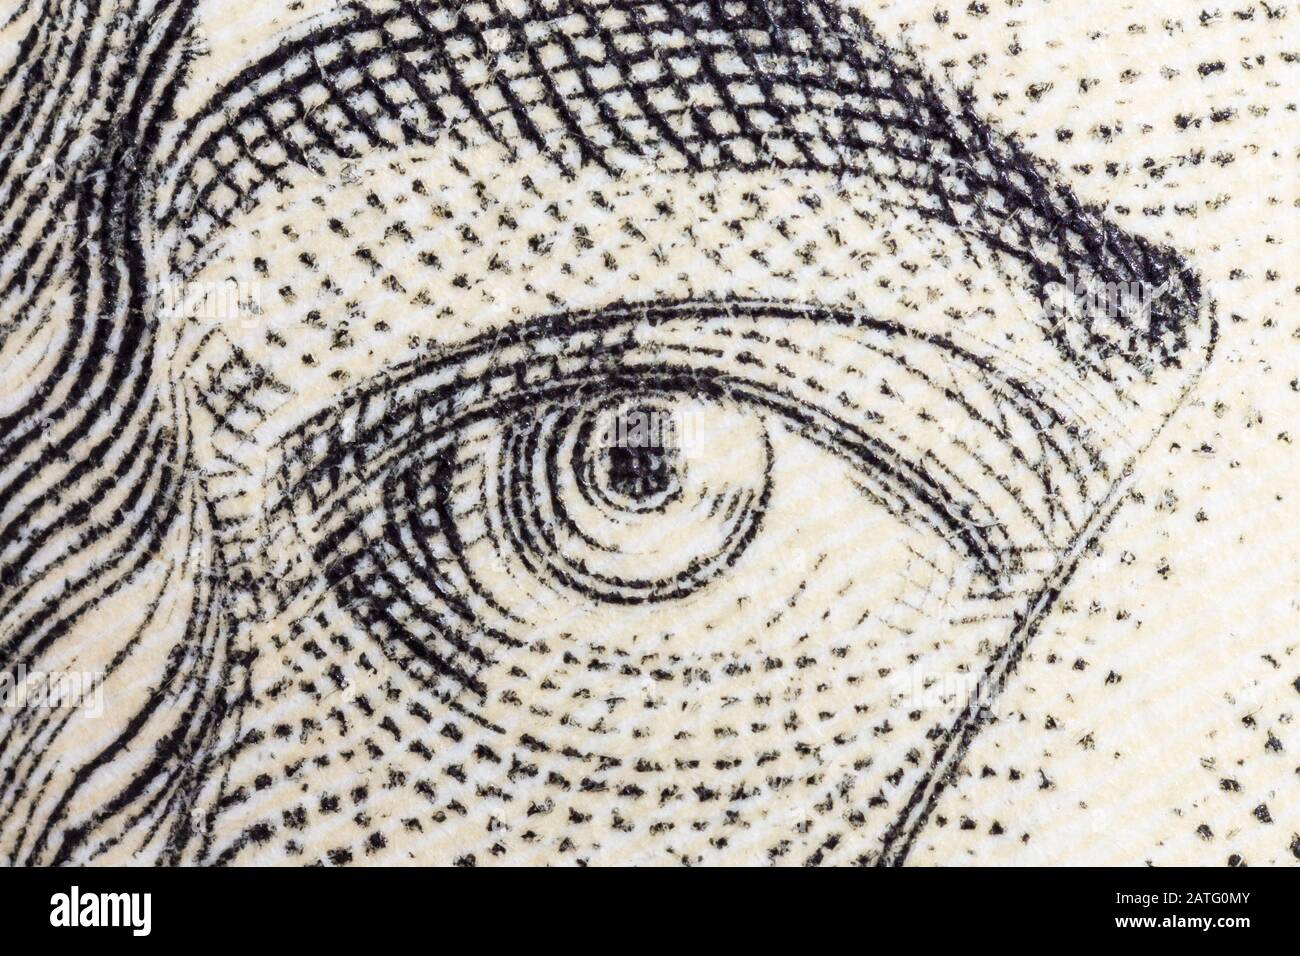 Macro close up photograph of Alexander Hamilton eye on the US ten dollar bill. Stock Photo